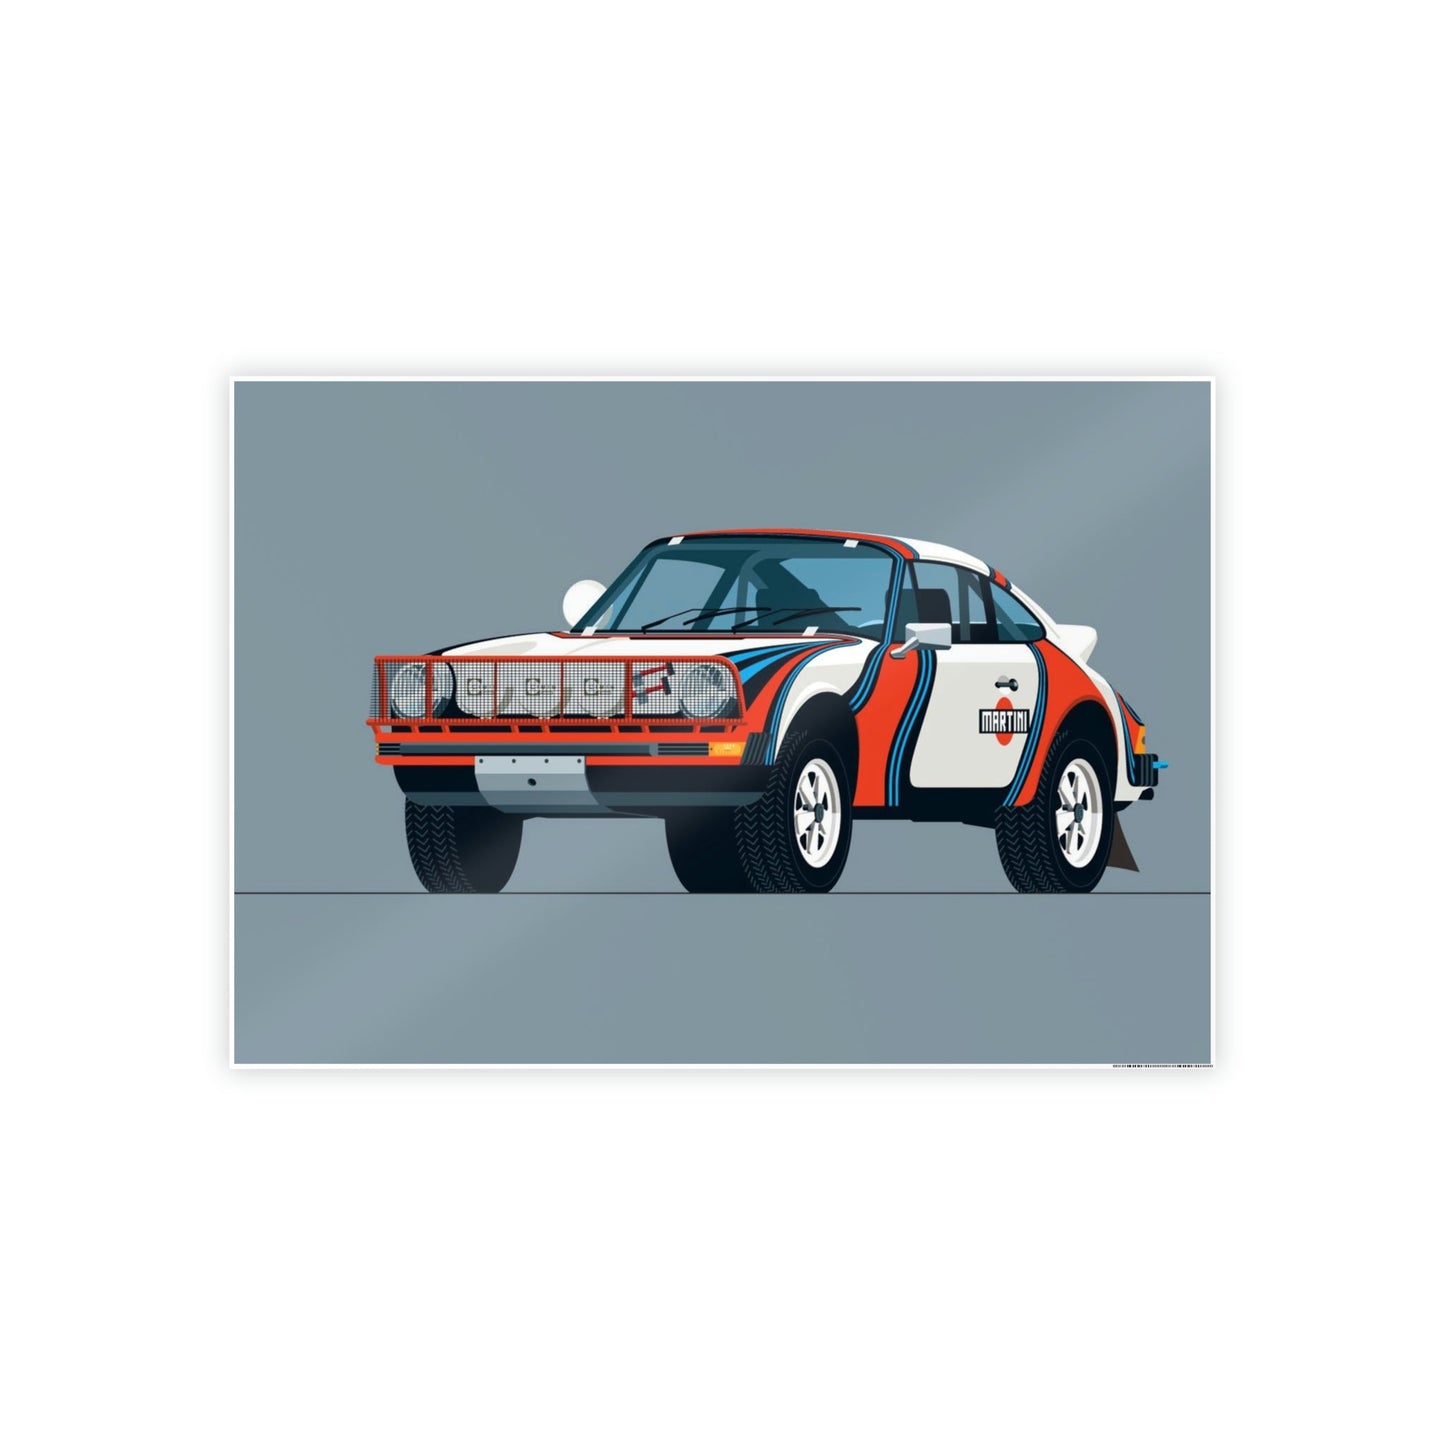 A Captivating Porsche Print: High-Quality Canvas Prints for Car Lovers